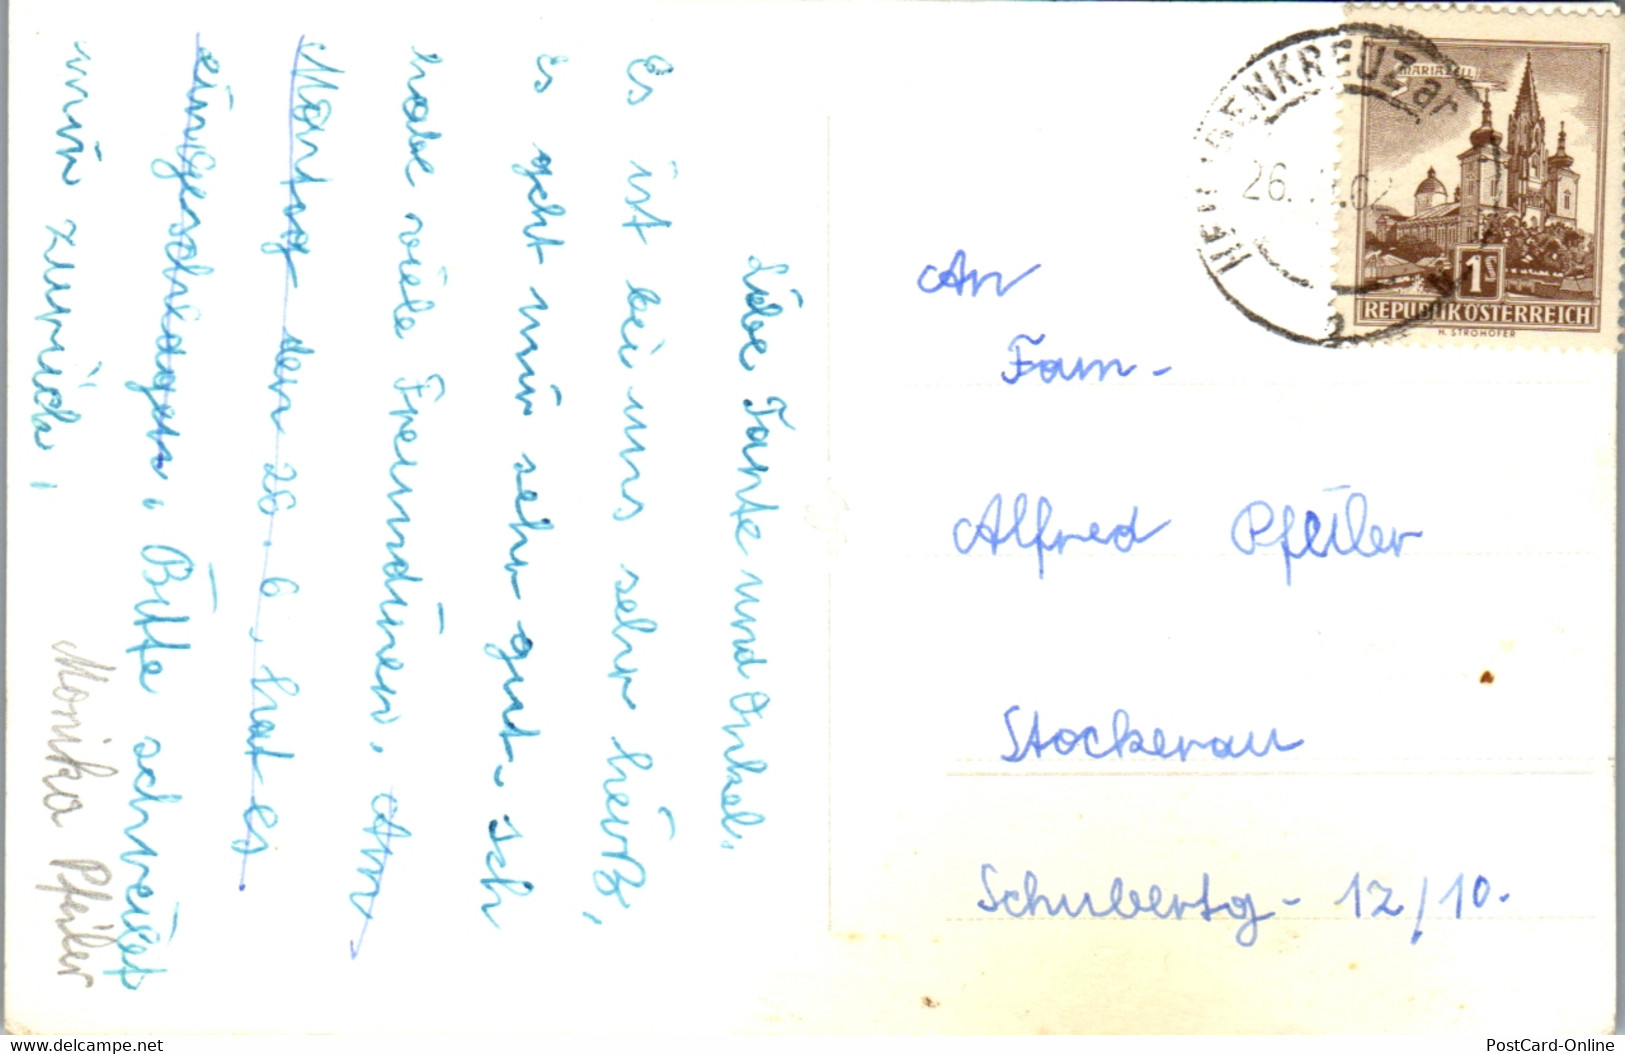 36569 - Steiermark - Heiligenkreuz Am Waasen , Rosenberg , Kindererholungsheim Ilsenheim - Gelaufen 1962 - Leibnitz